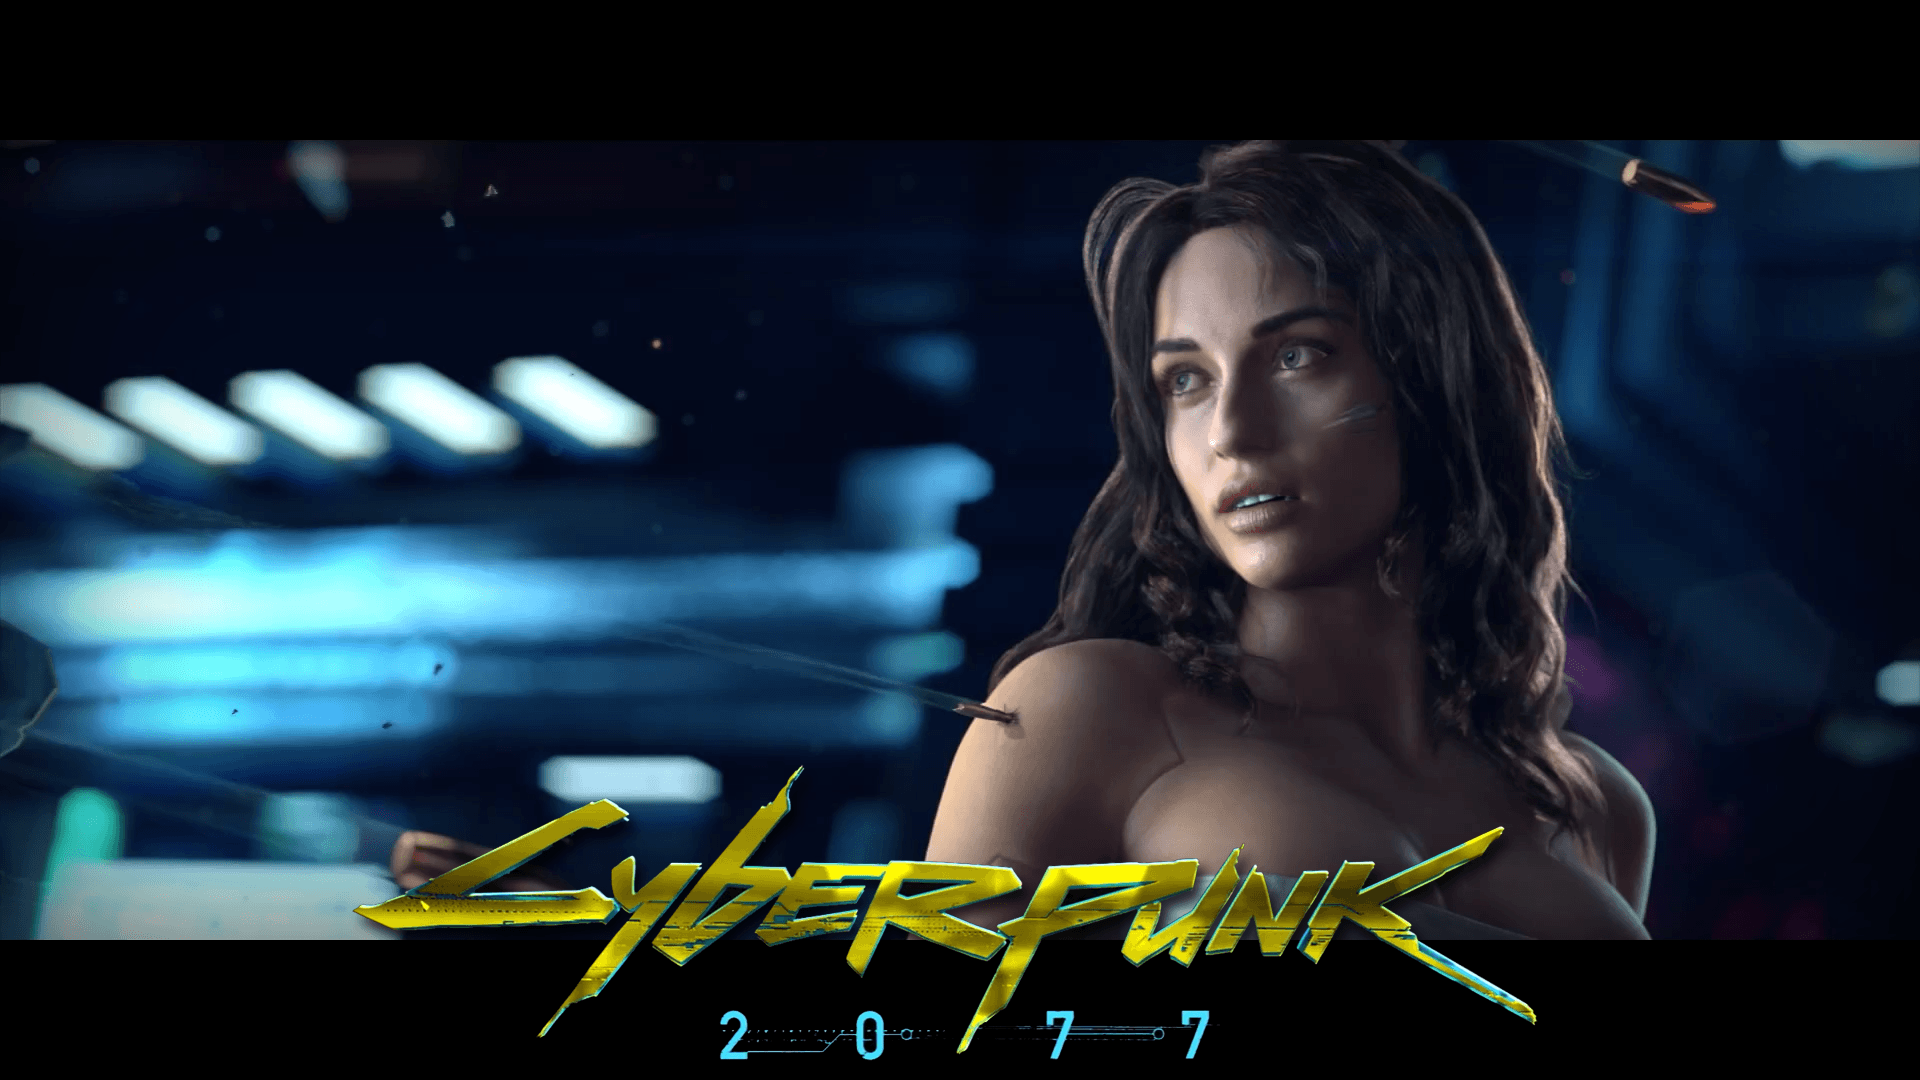 Cyberpunk 2077 HD Wallpaper and Background Image